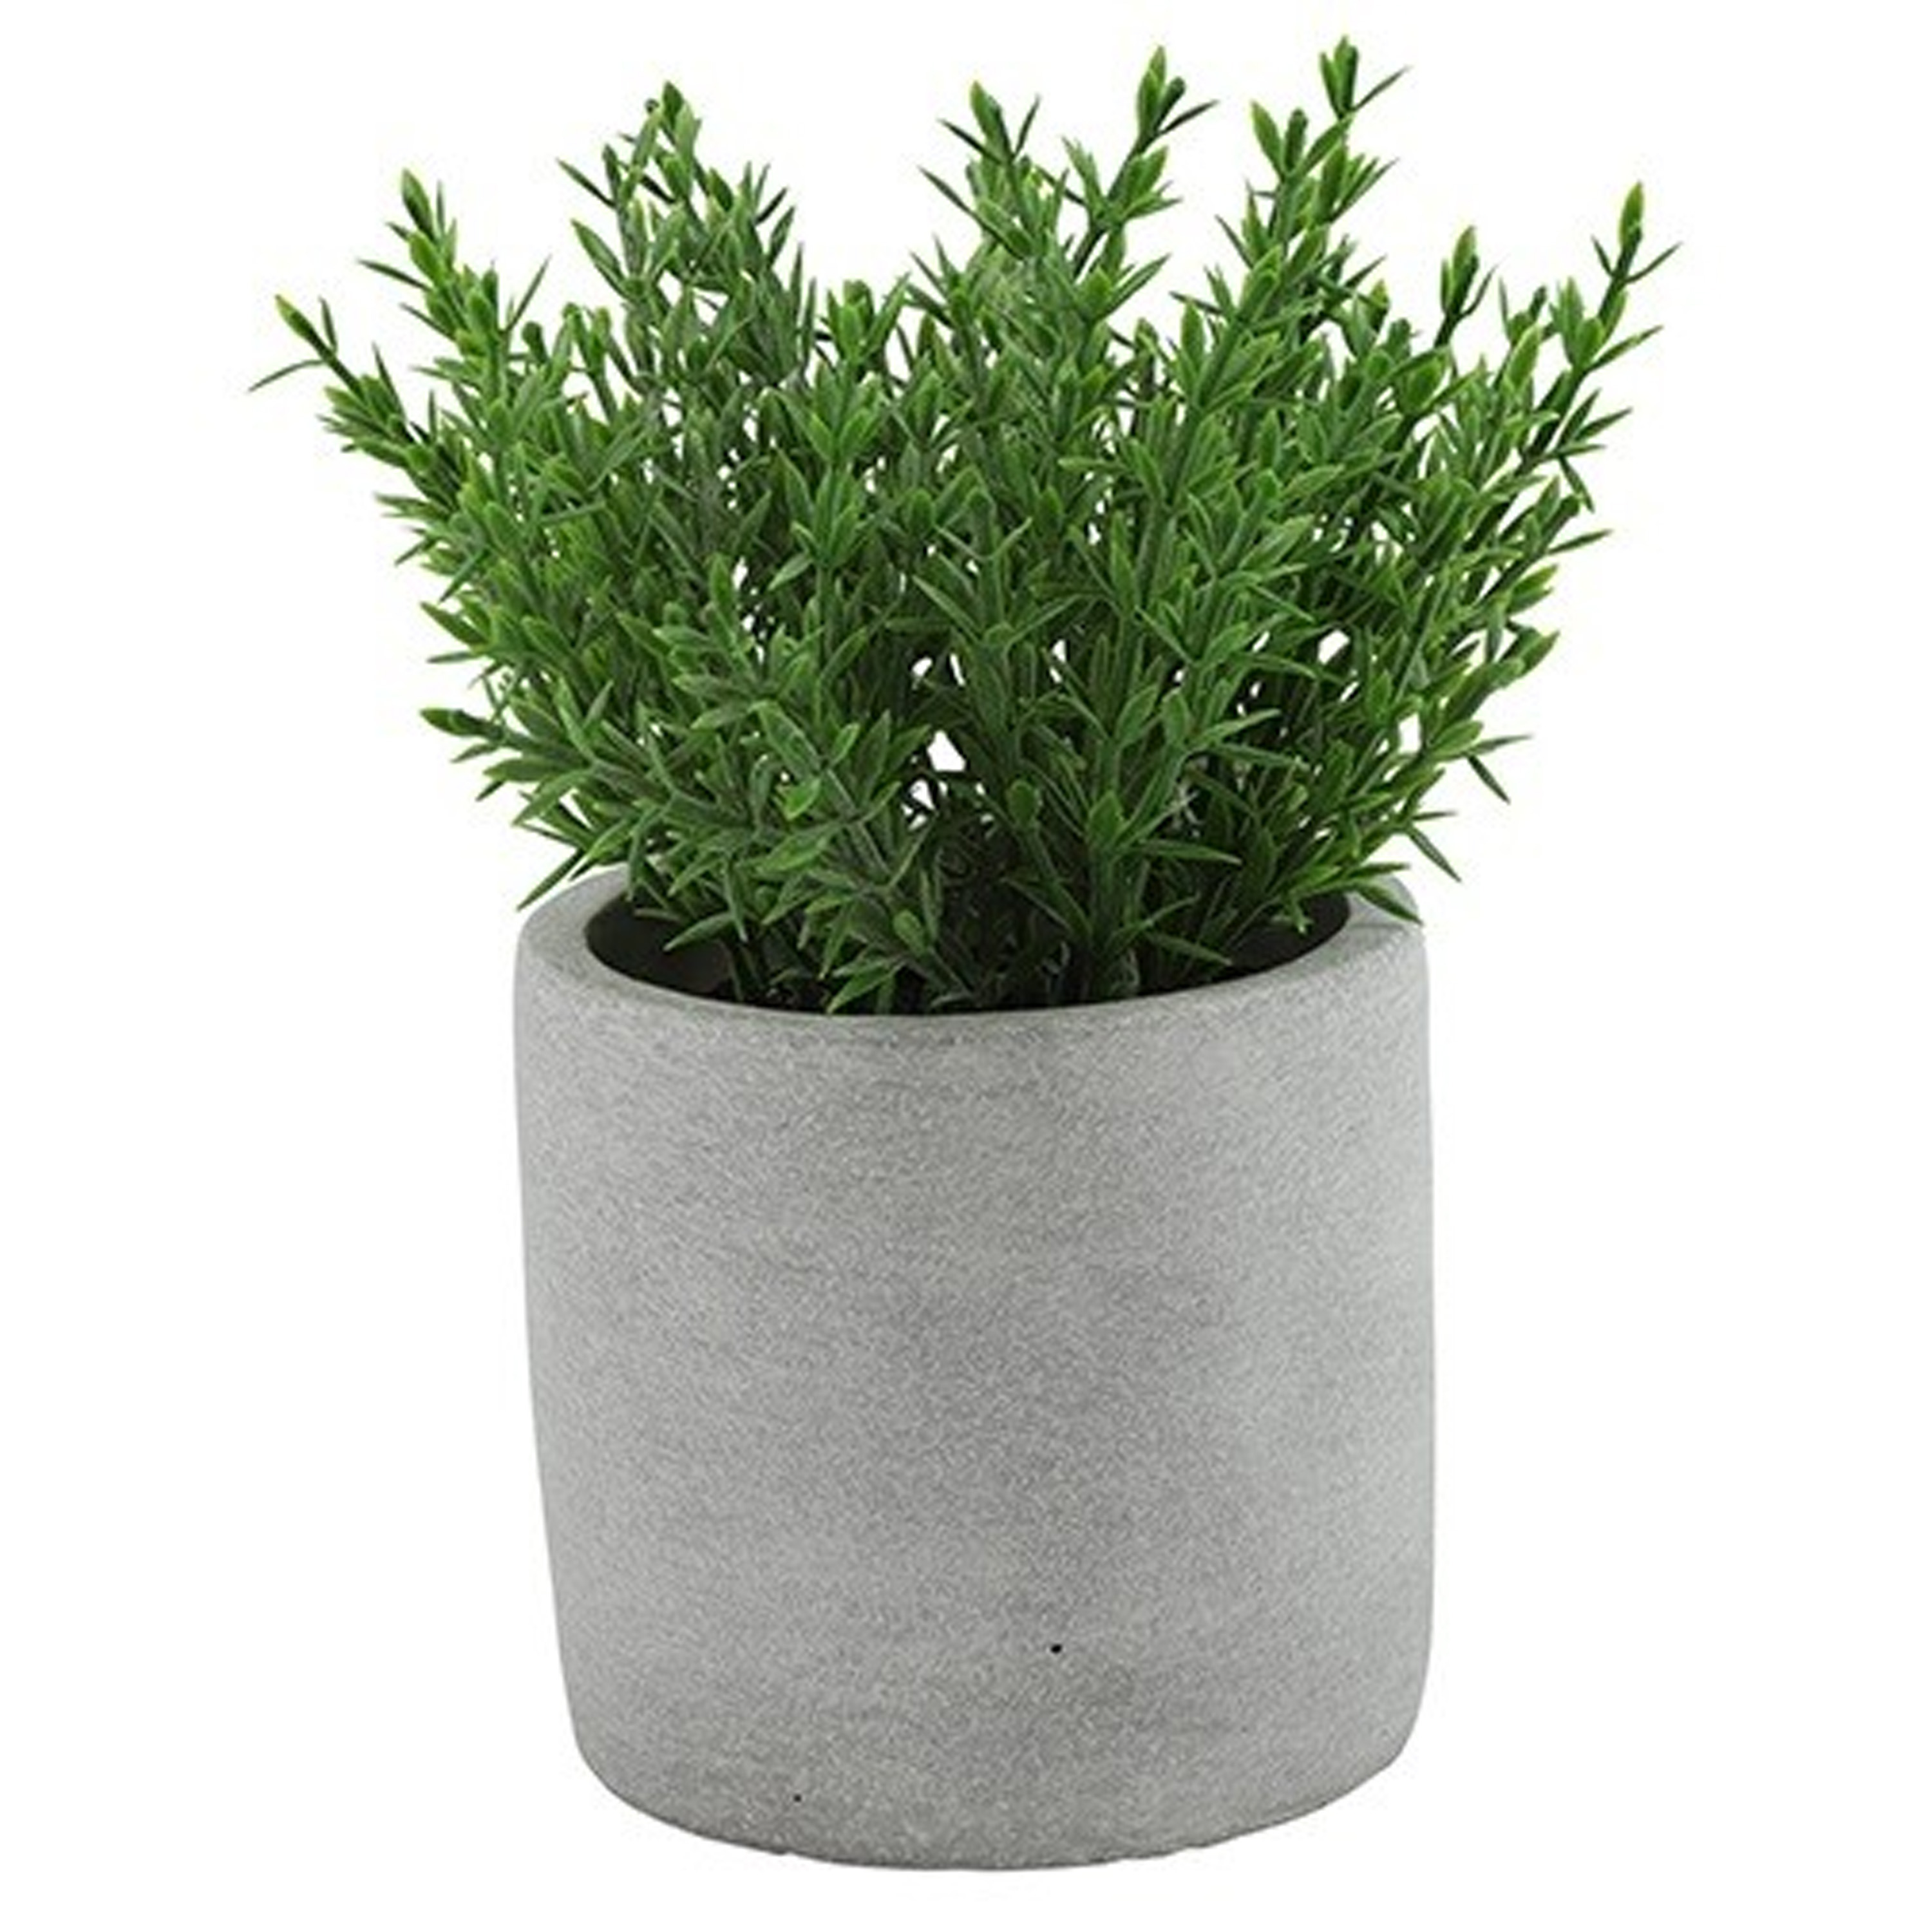 Kunstplant-kruiden thijm Countryfield in grijs cement potje 19 cm kruiden